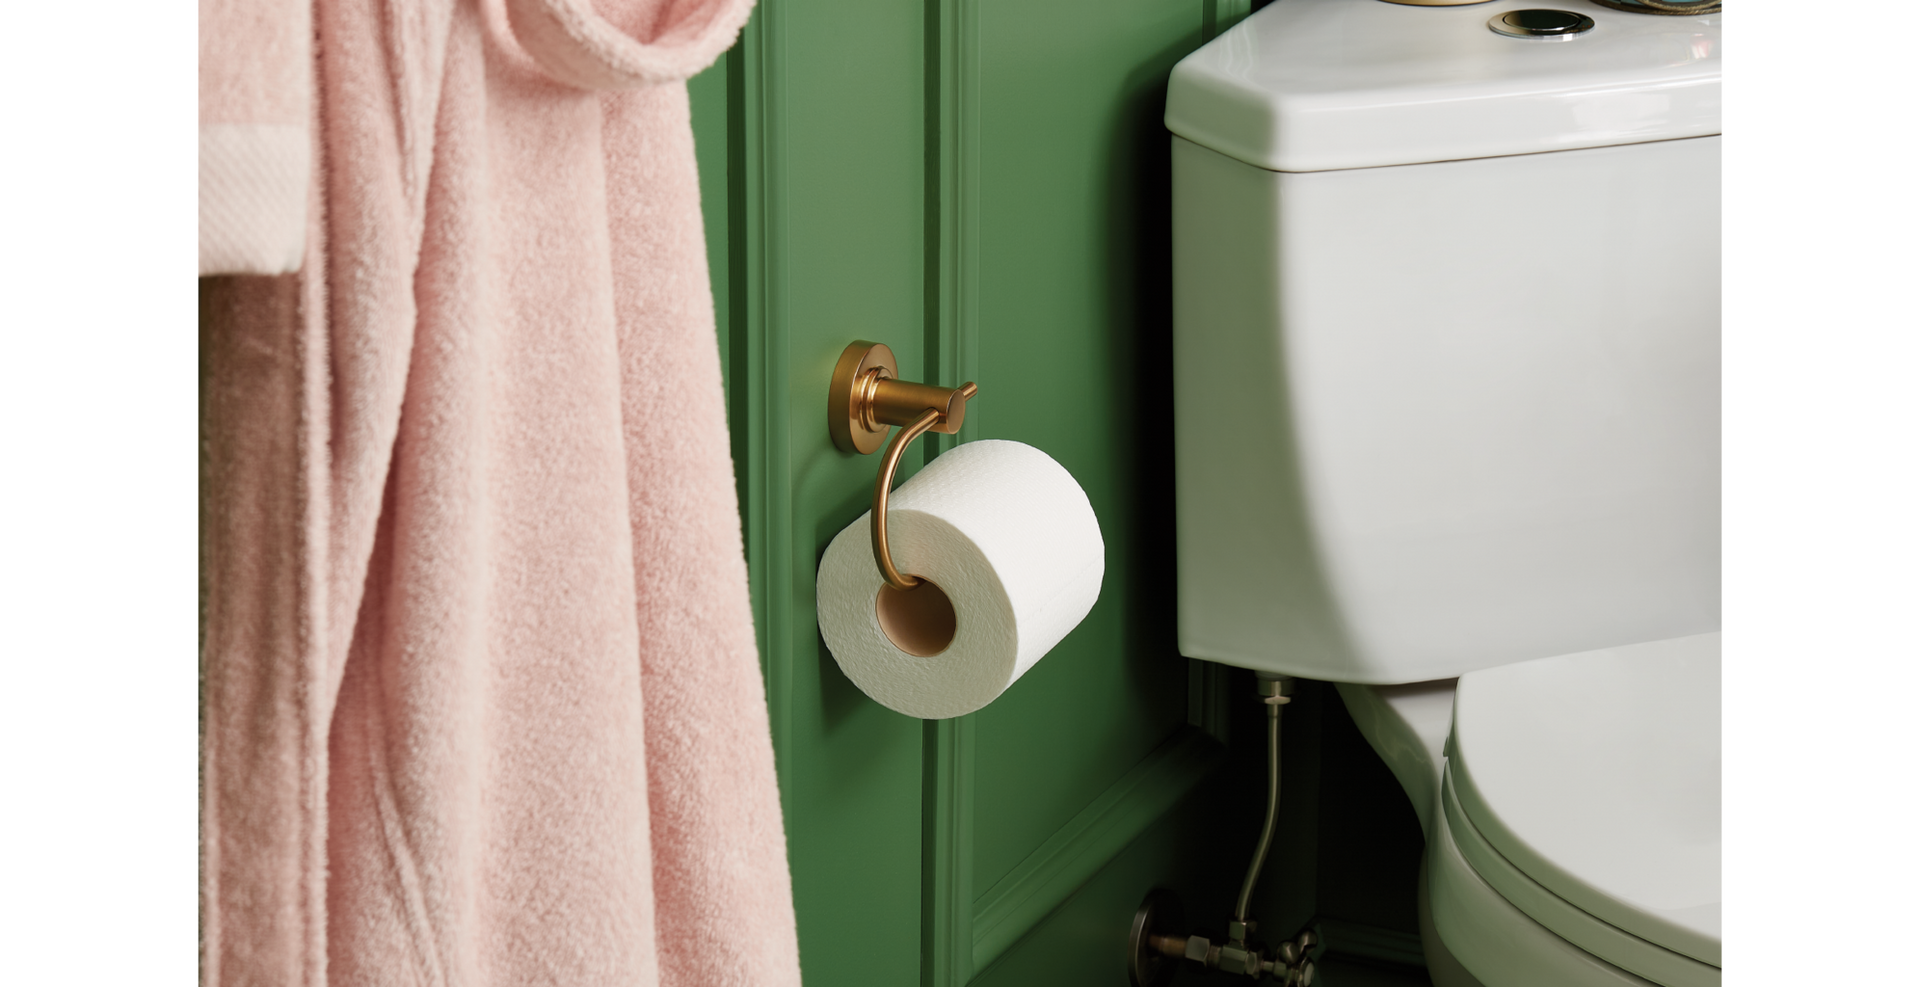 Toilet Paper Holder Over The Tank Tissue Roll Holder Hanging Over